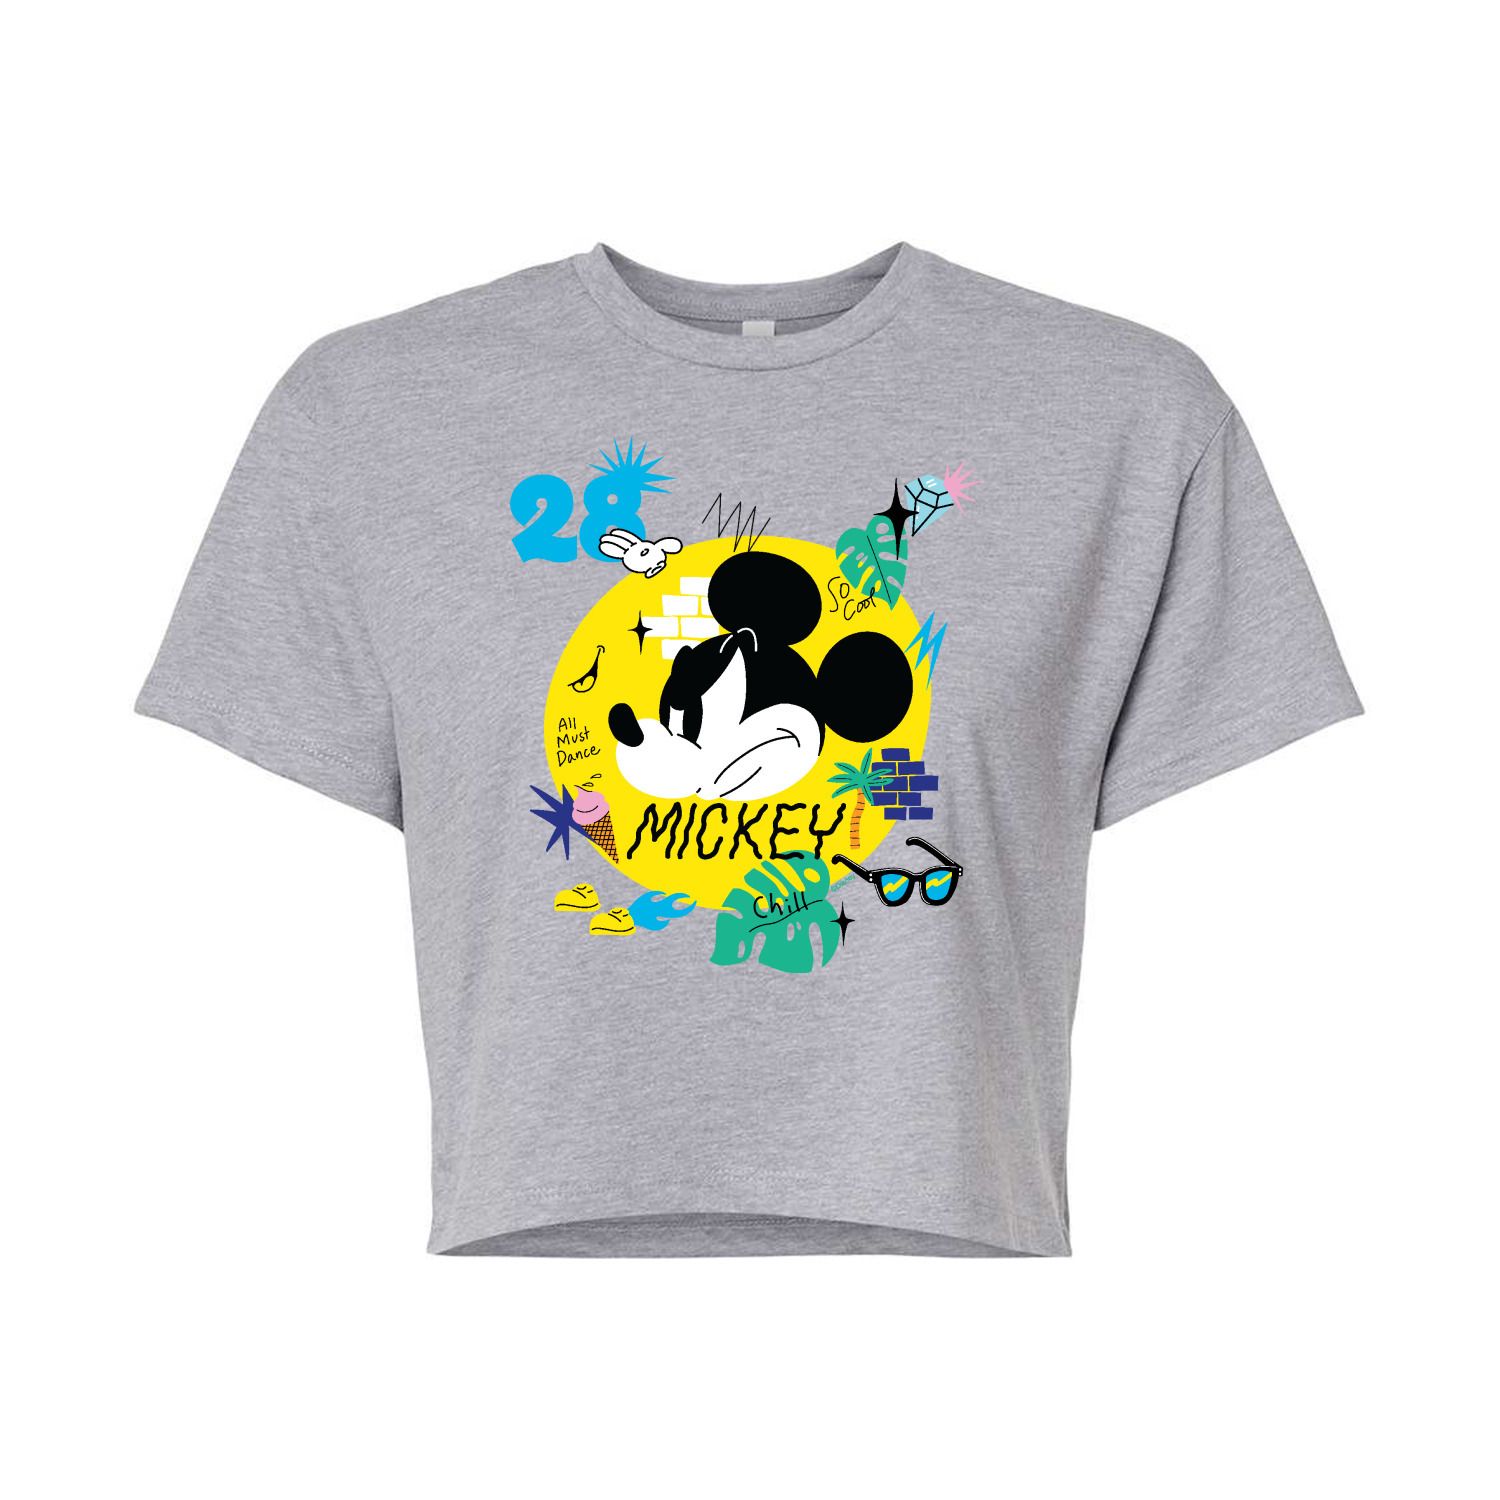 Укороченная футболка с рисунком Микки Мауса для детей Disney's Mickey So Cool Licensed Character